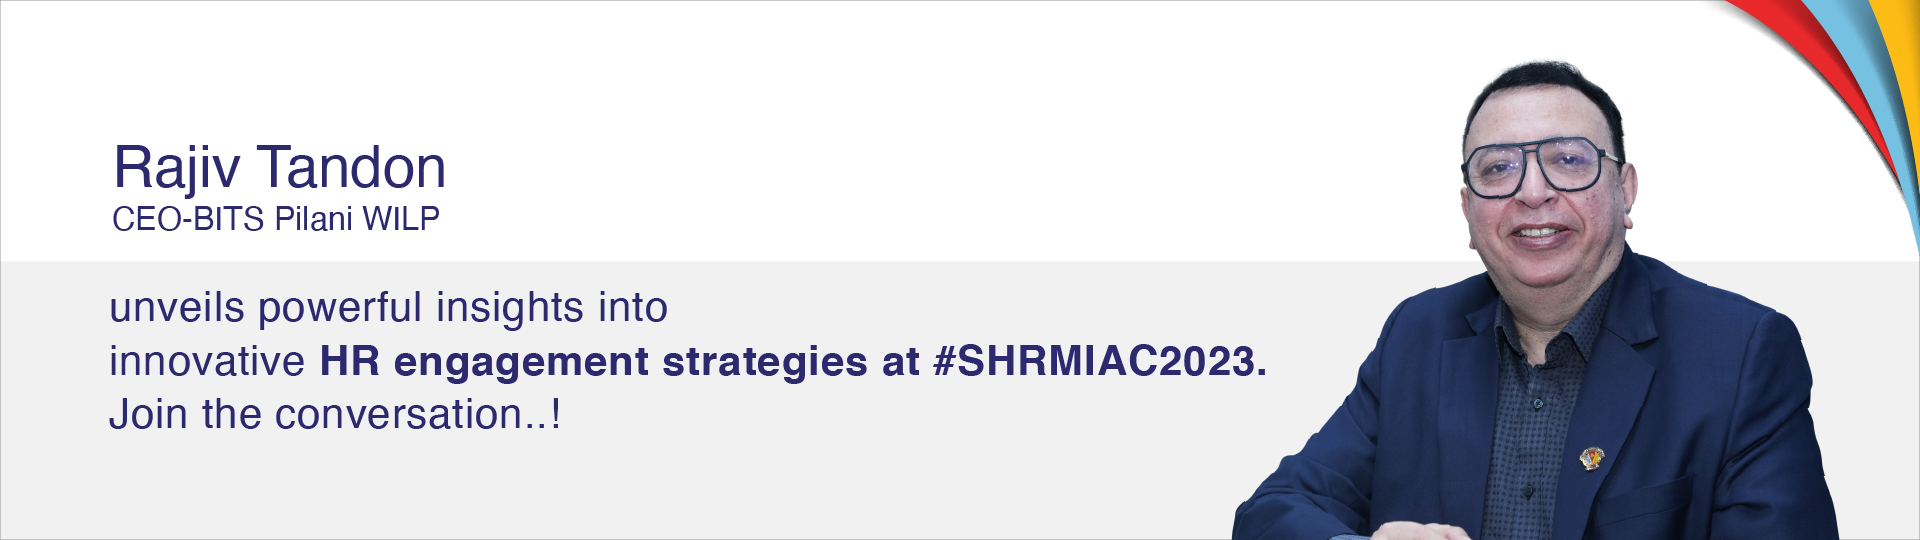 Rajiv Tandon, CEO - BITS Pilani WILP throws light on various HR engagement strategies at #SHRMIAC23